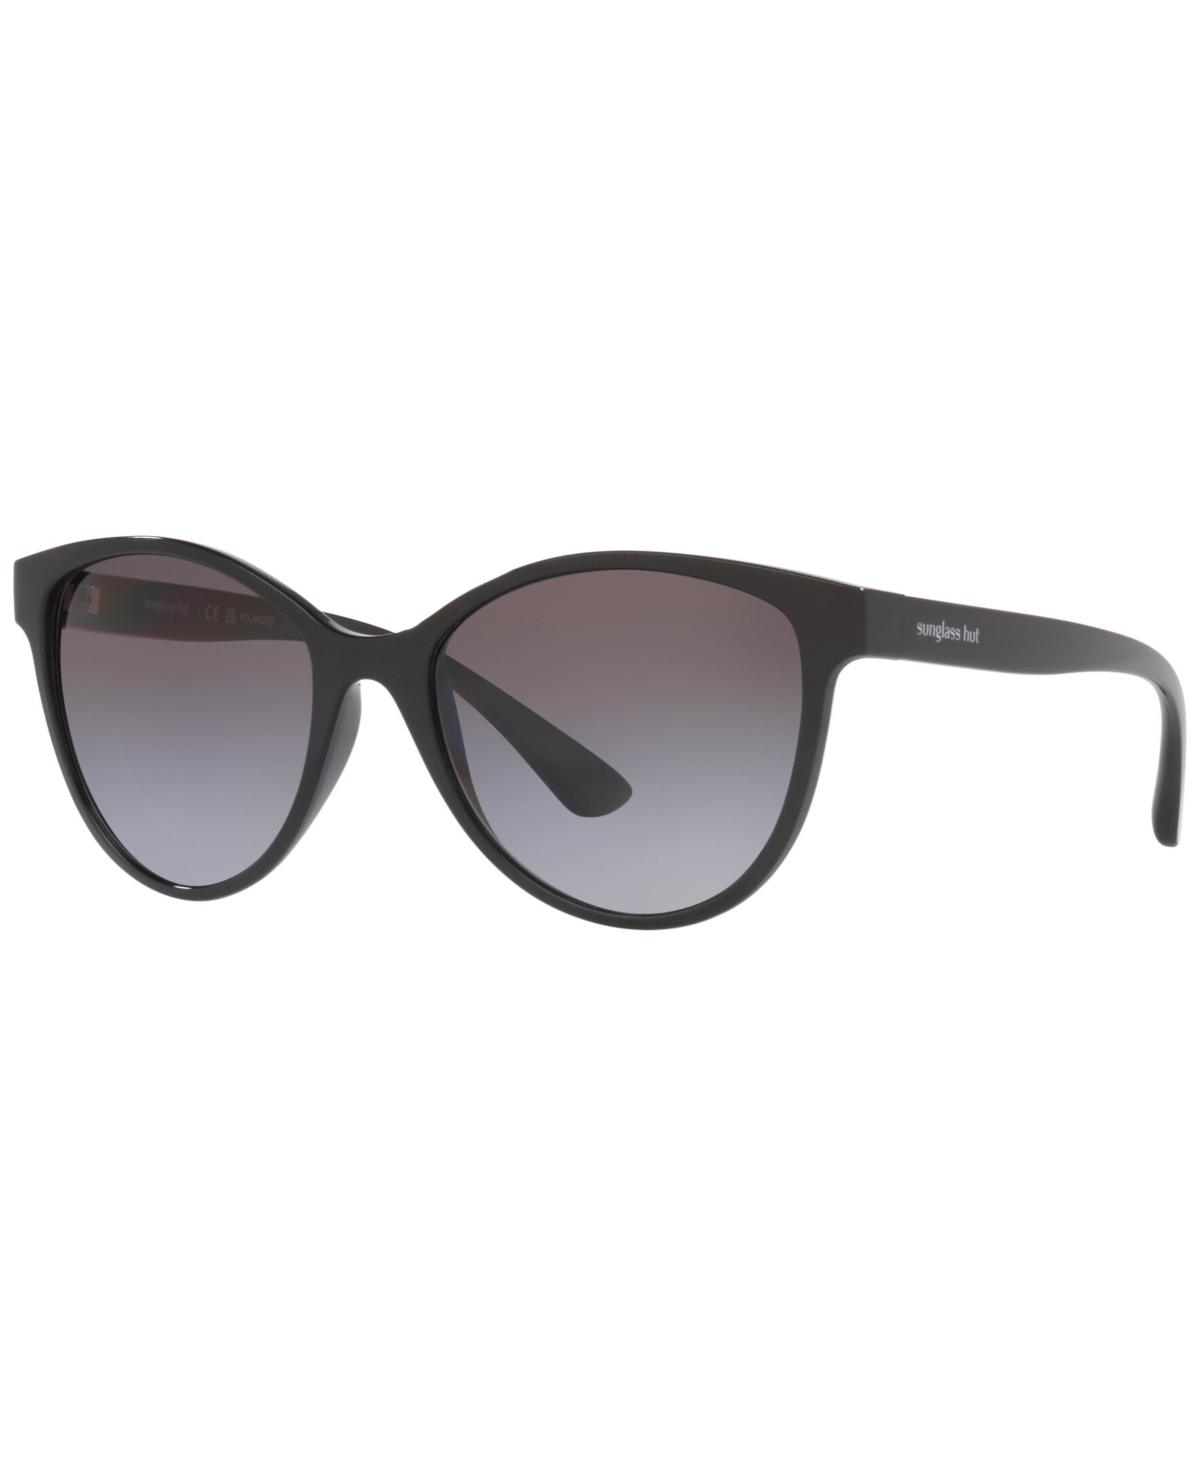 Women's Polarized Sunglasses, HU202155-yp - Shiny Black